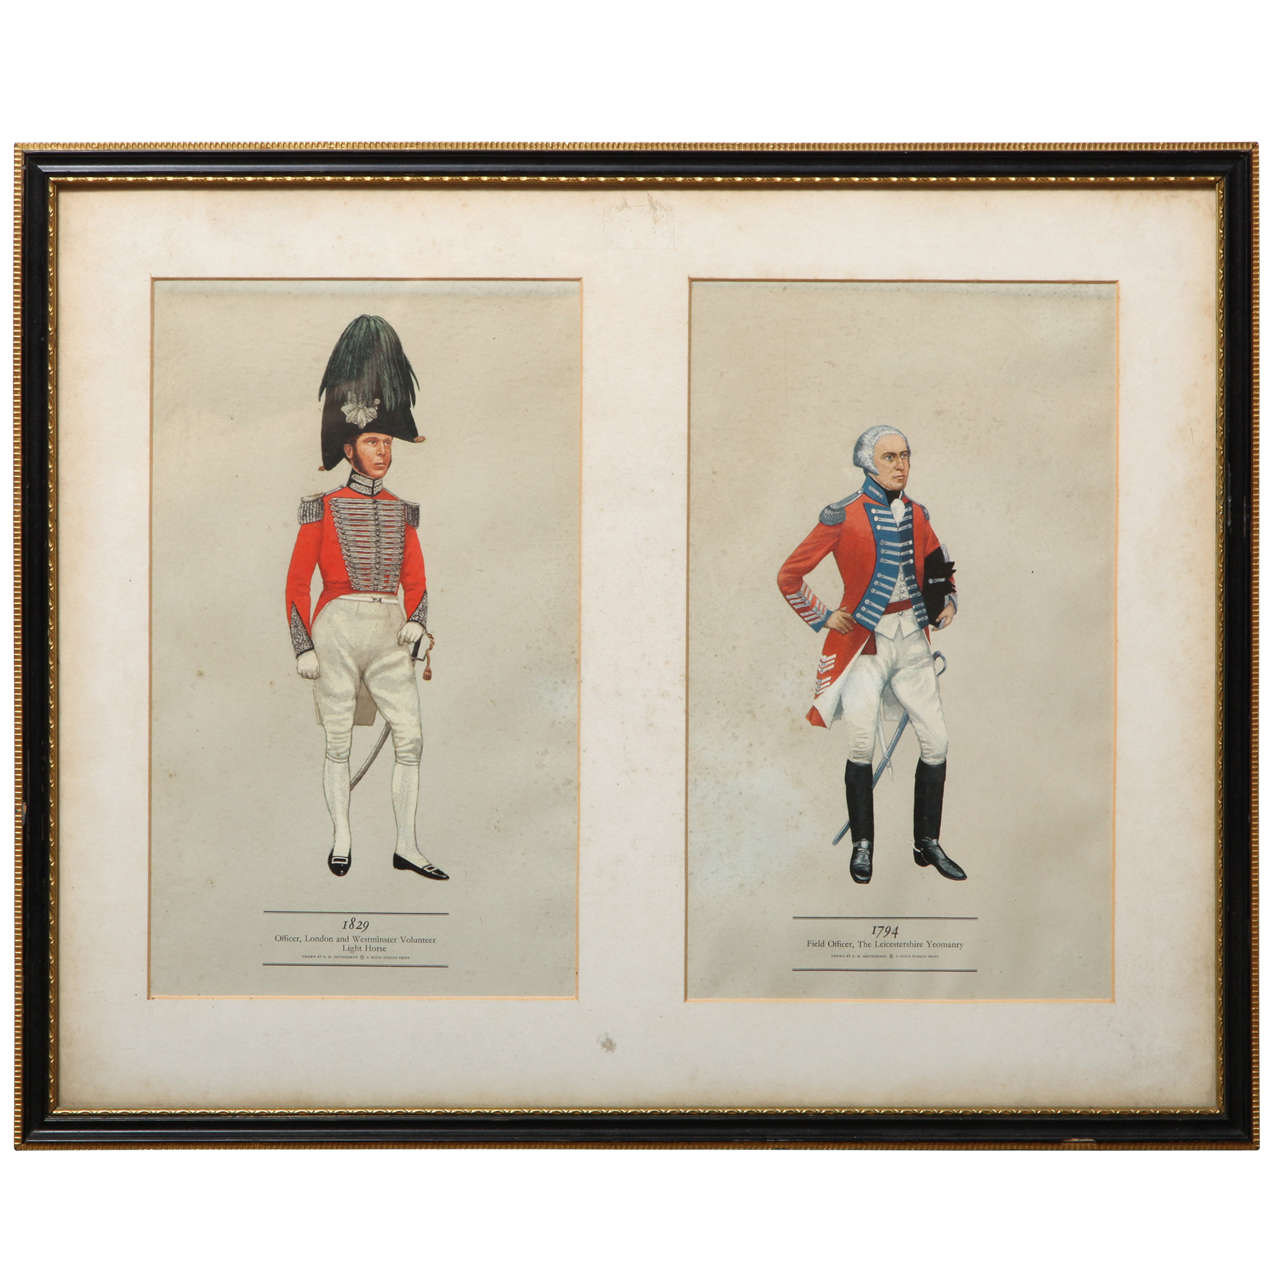 19th Century Coloured Print in a Hogarth Frame